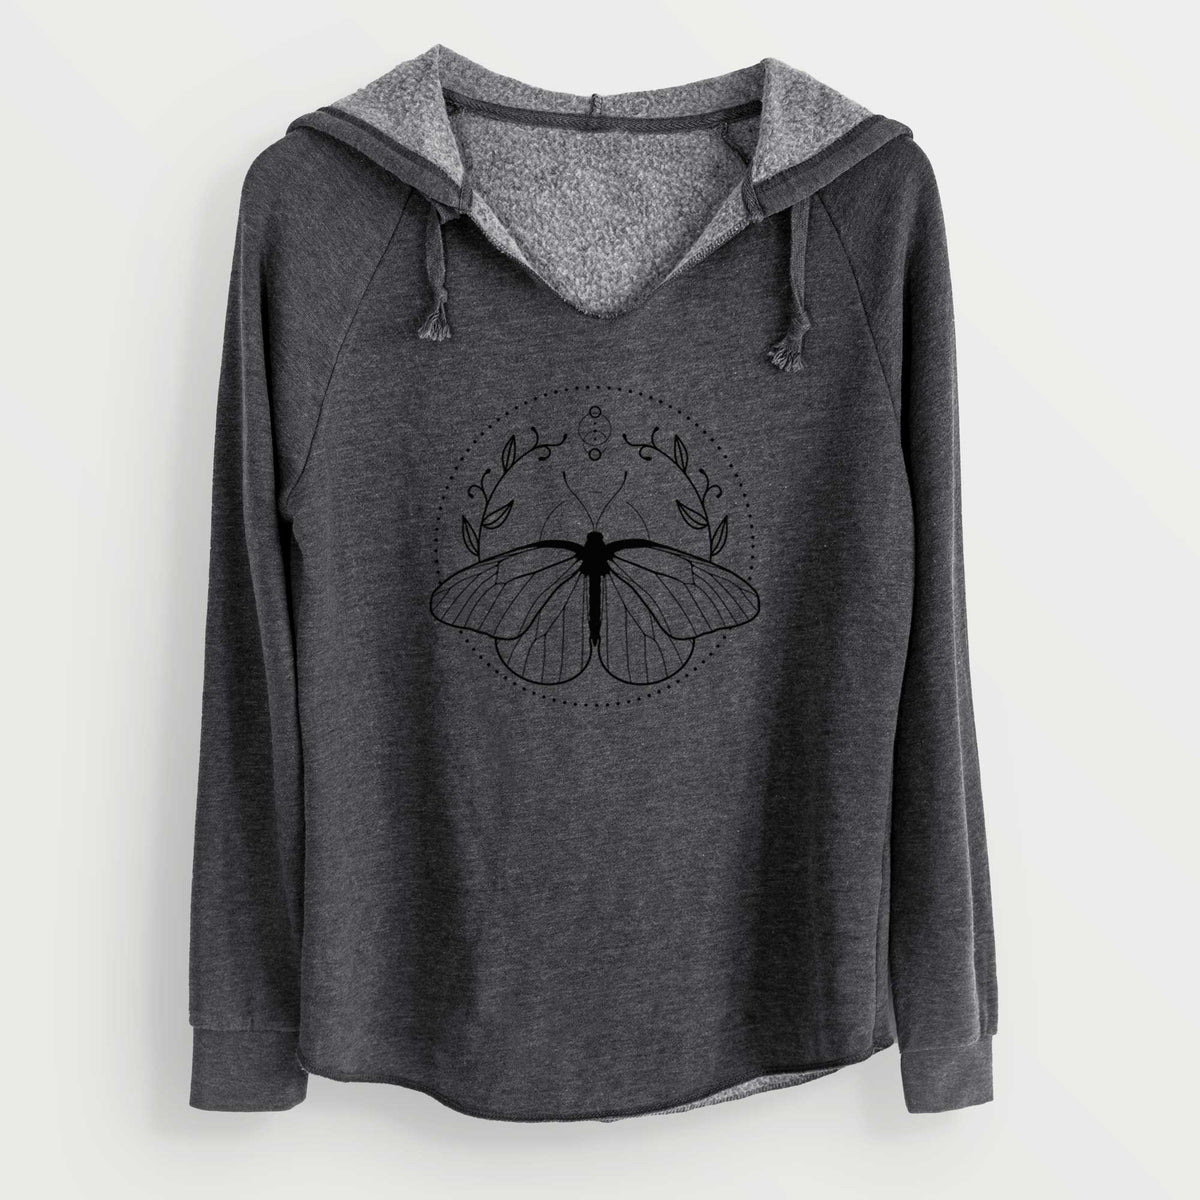 Aporia crataegi - Black Veined White Butterfly - Cali Wave Hooded Sweatshirt